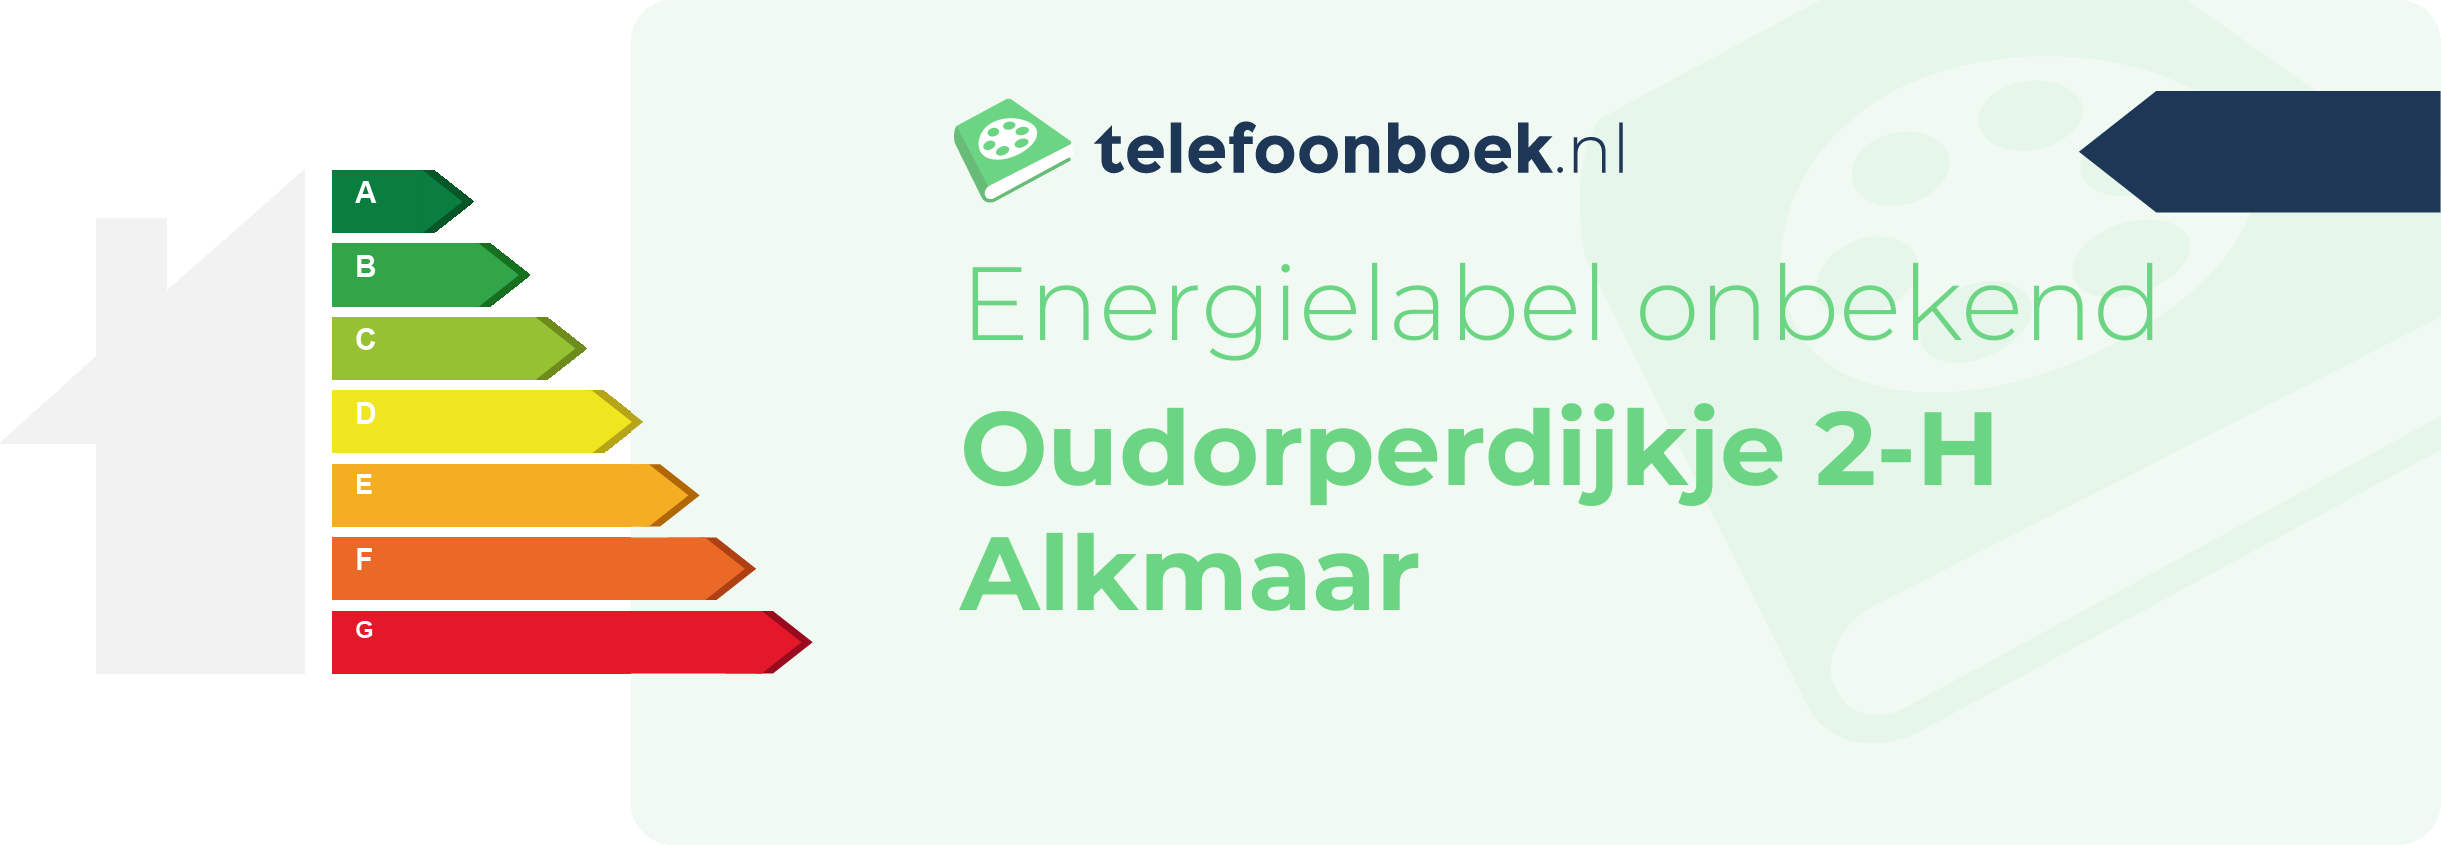 Energielabel Oudorperdijkje 2-H Alkmaar